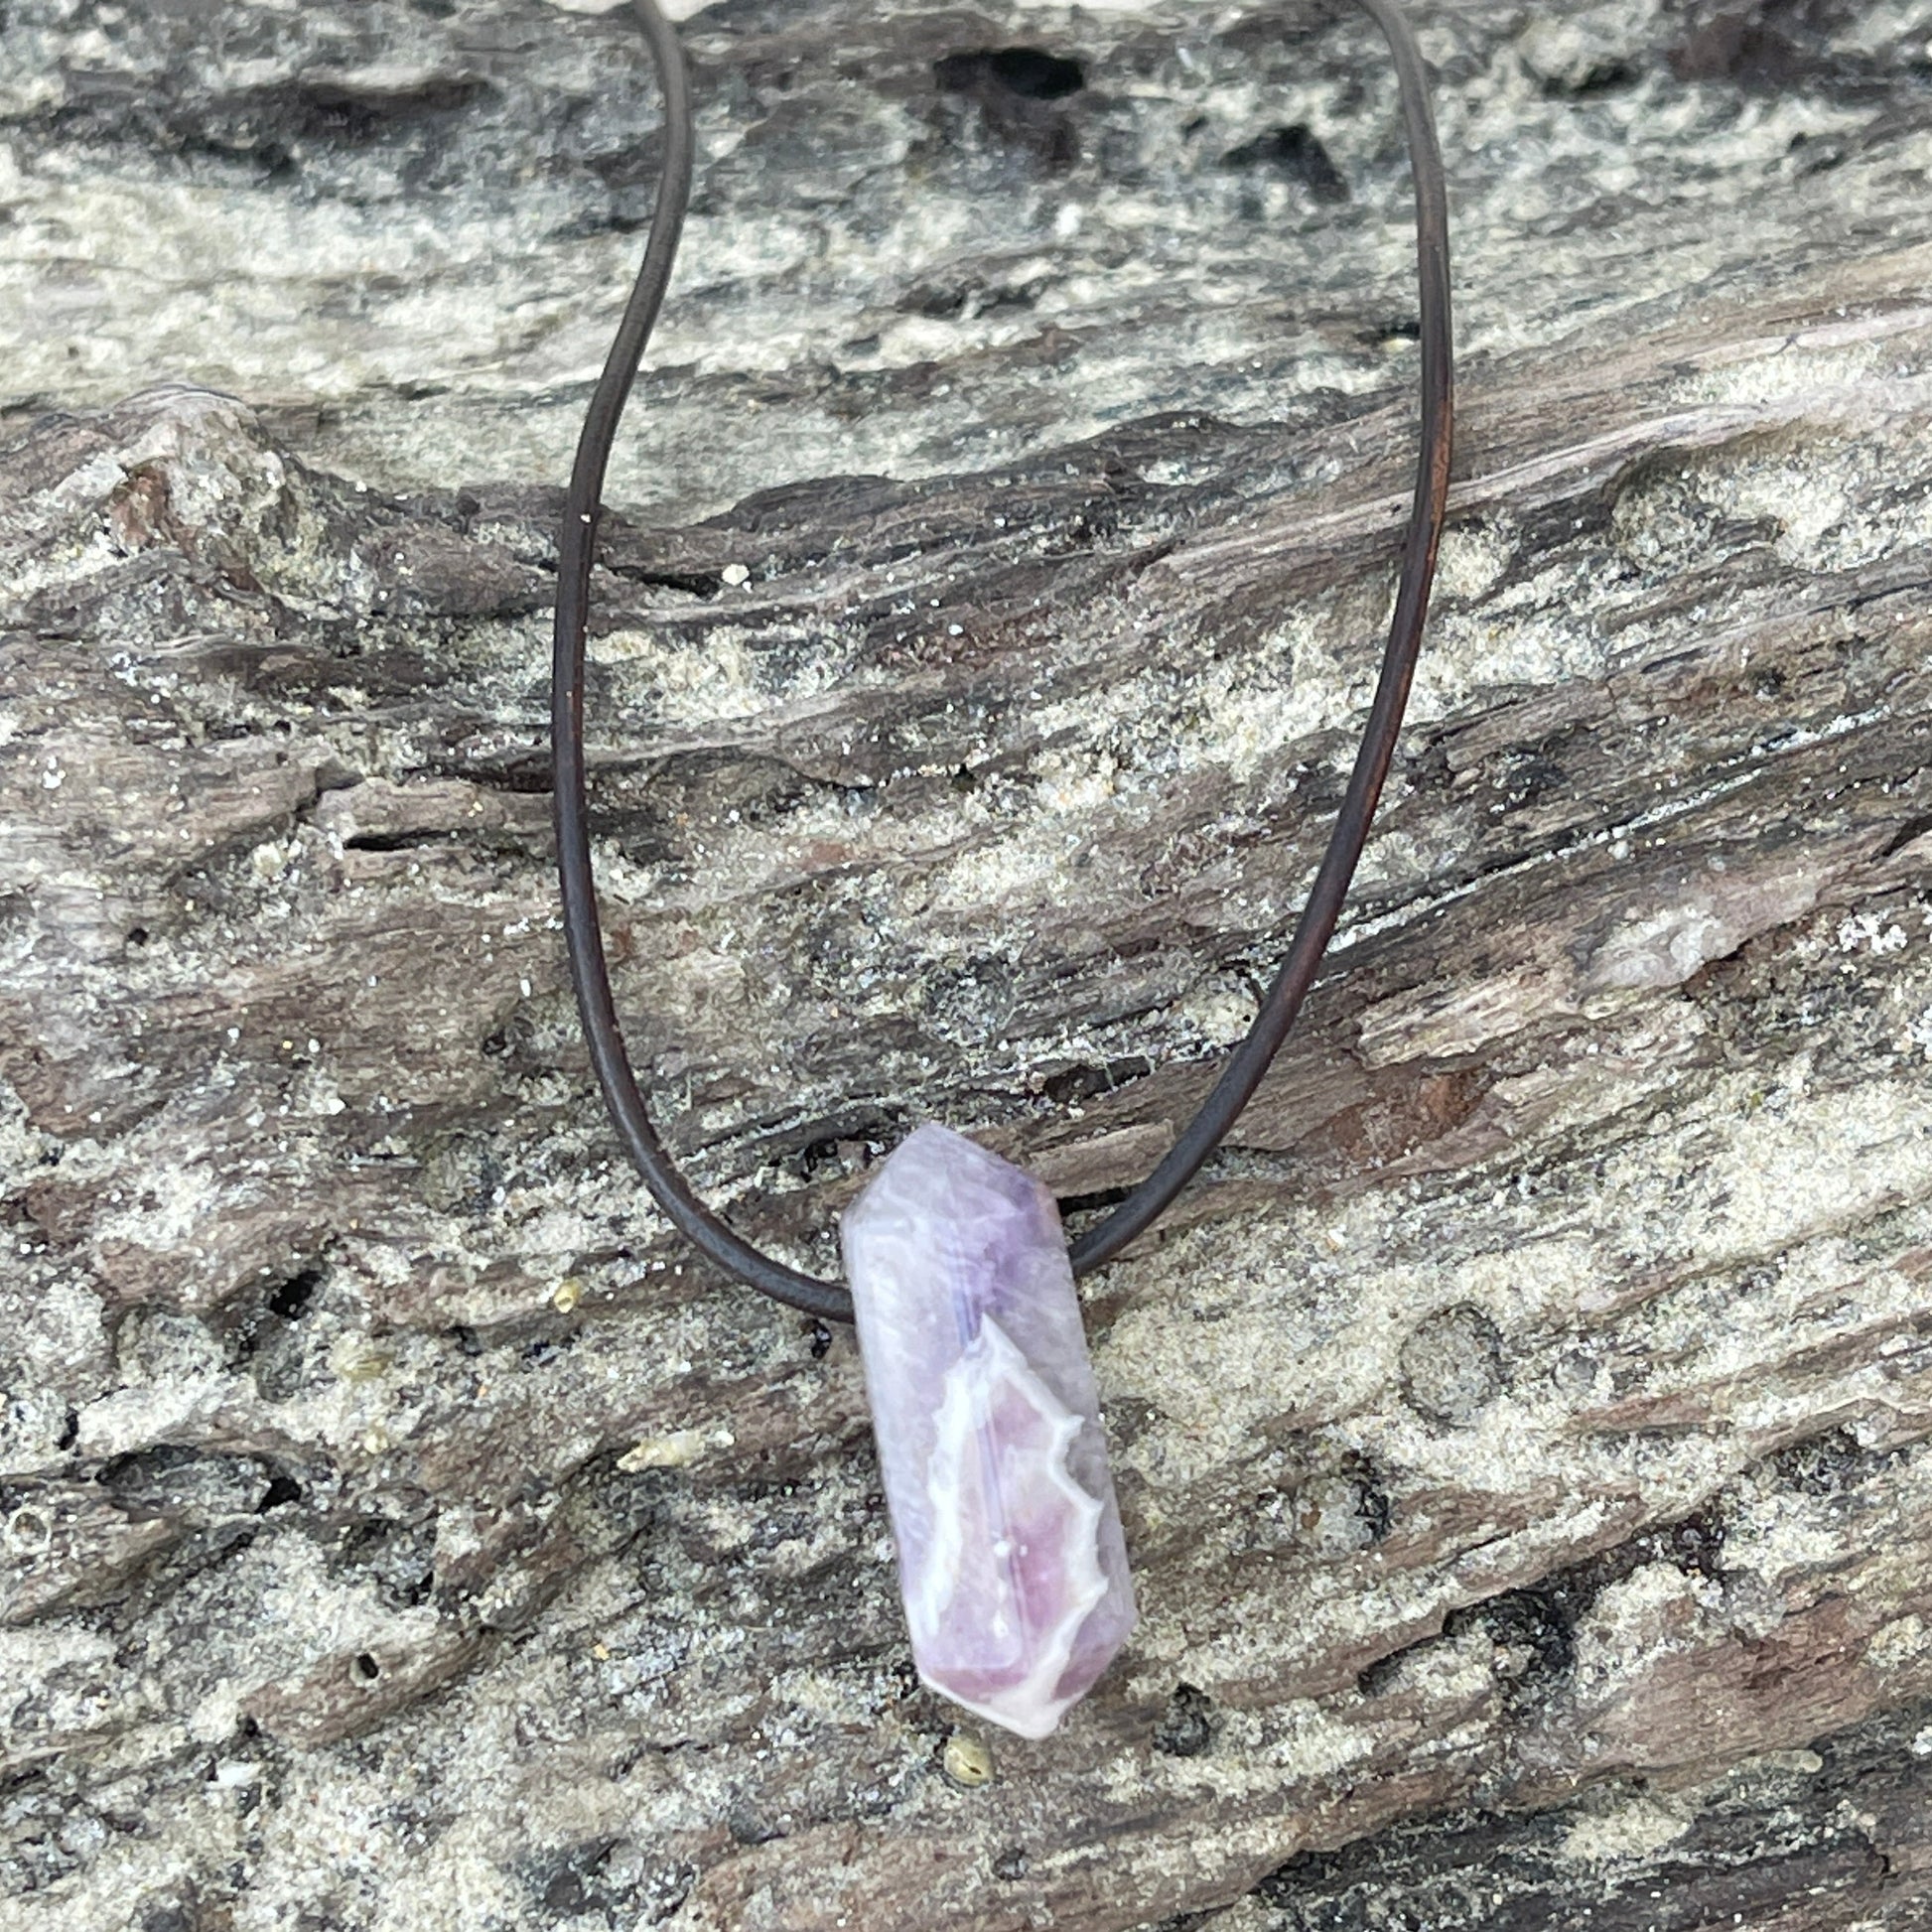 Purple stone necklace